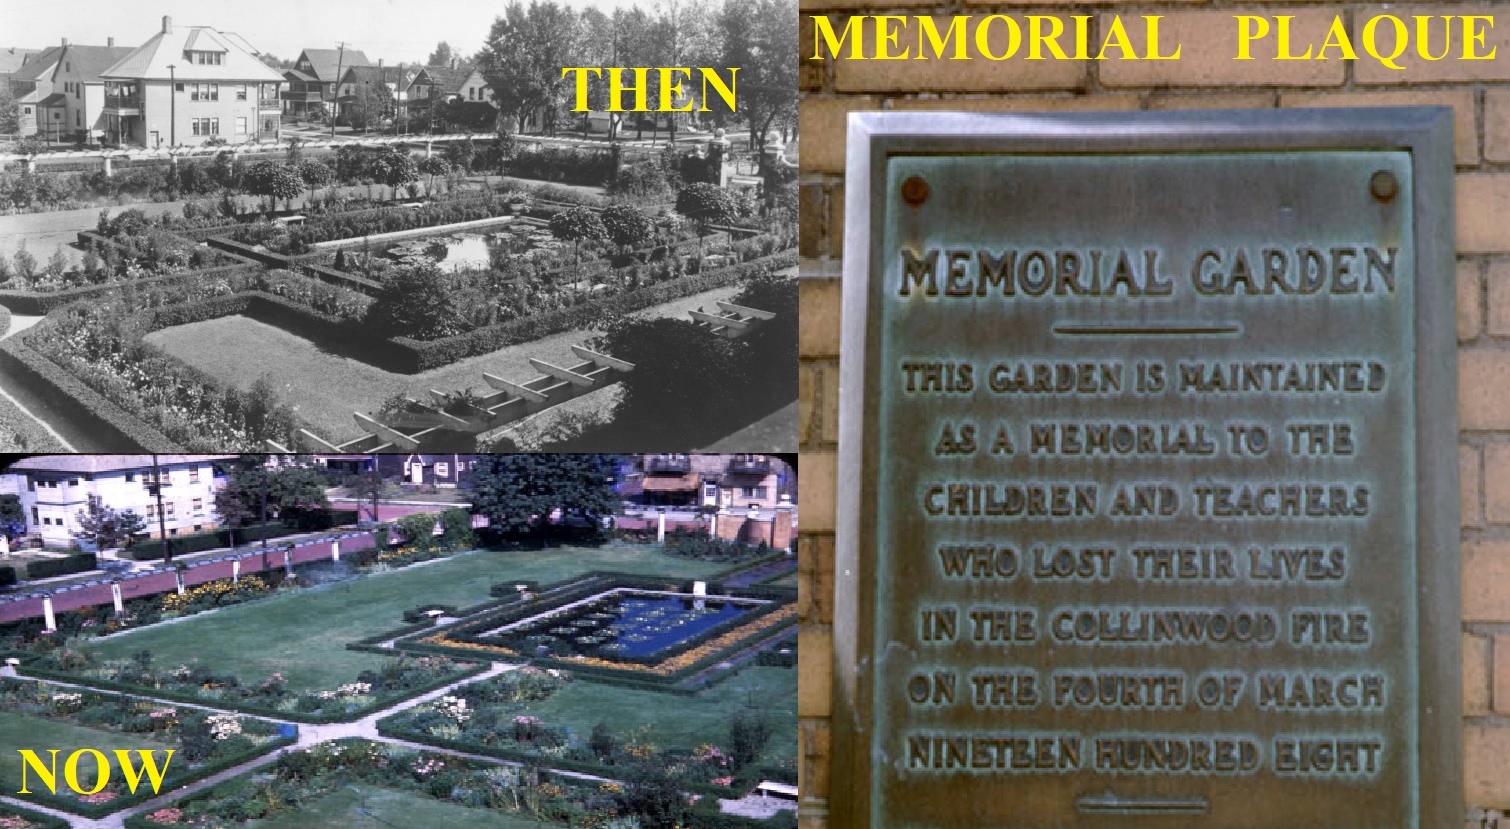 A memorial garden was put on the site of the original school ~